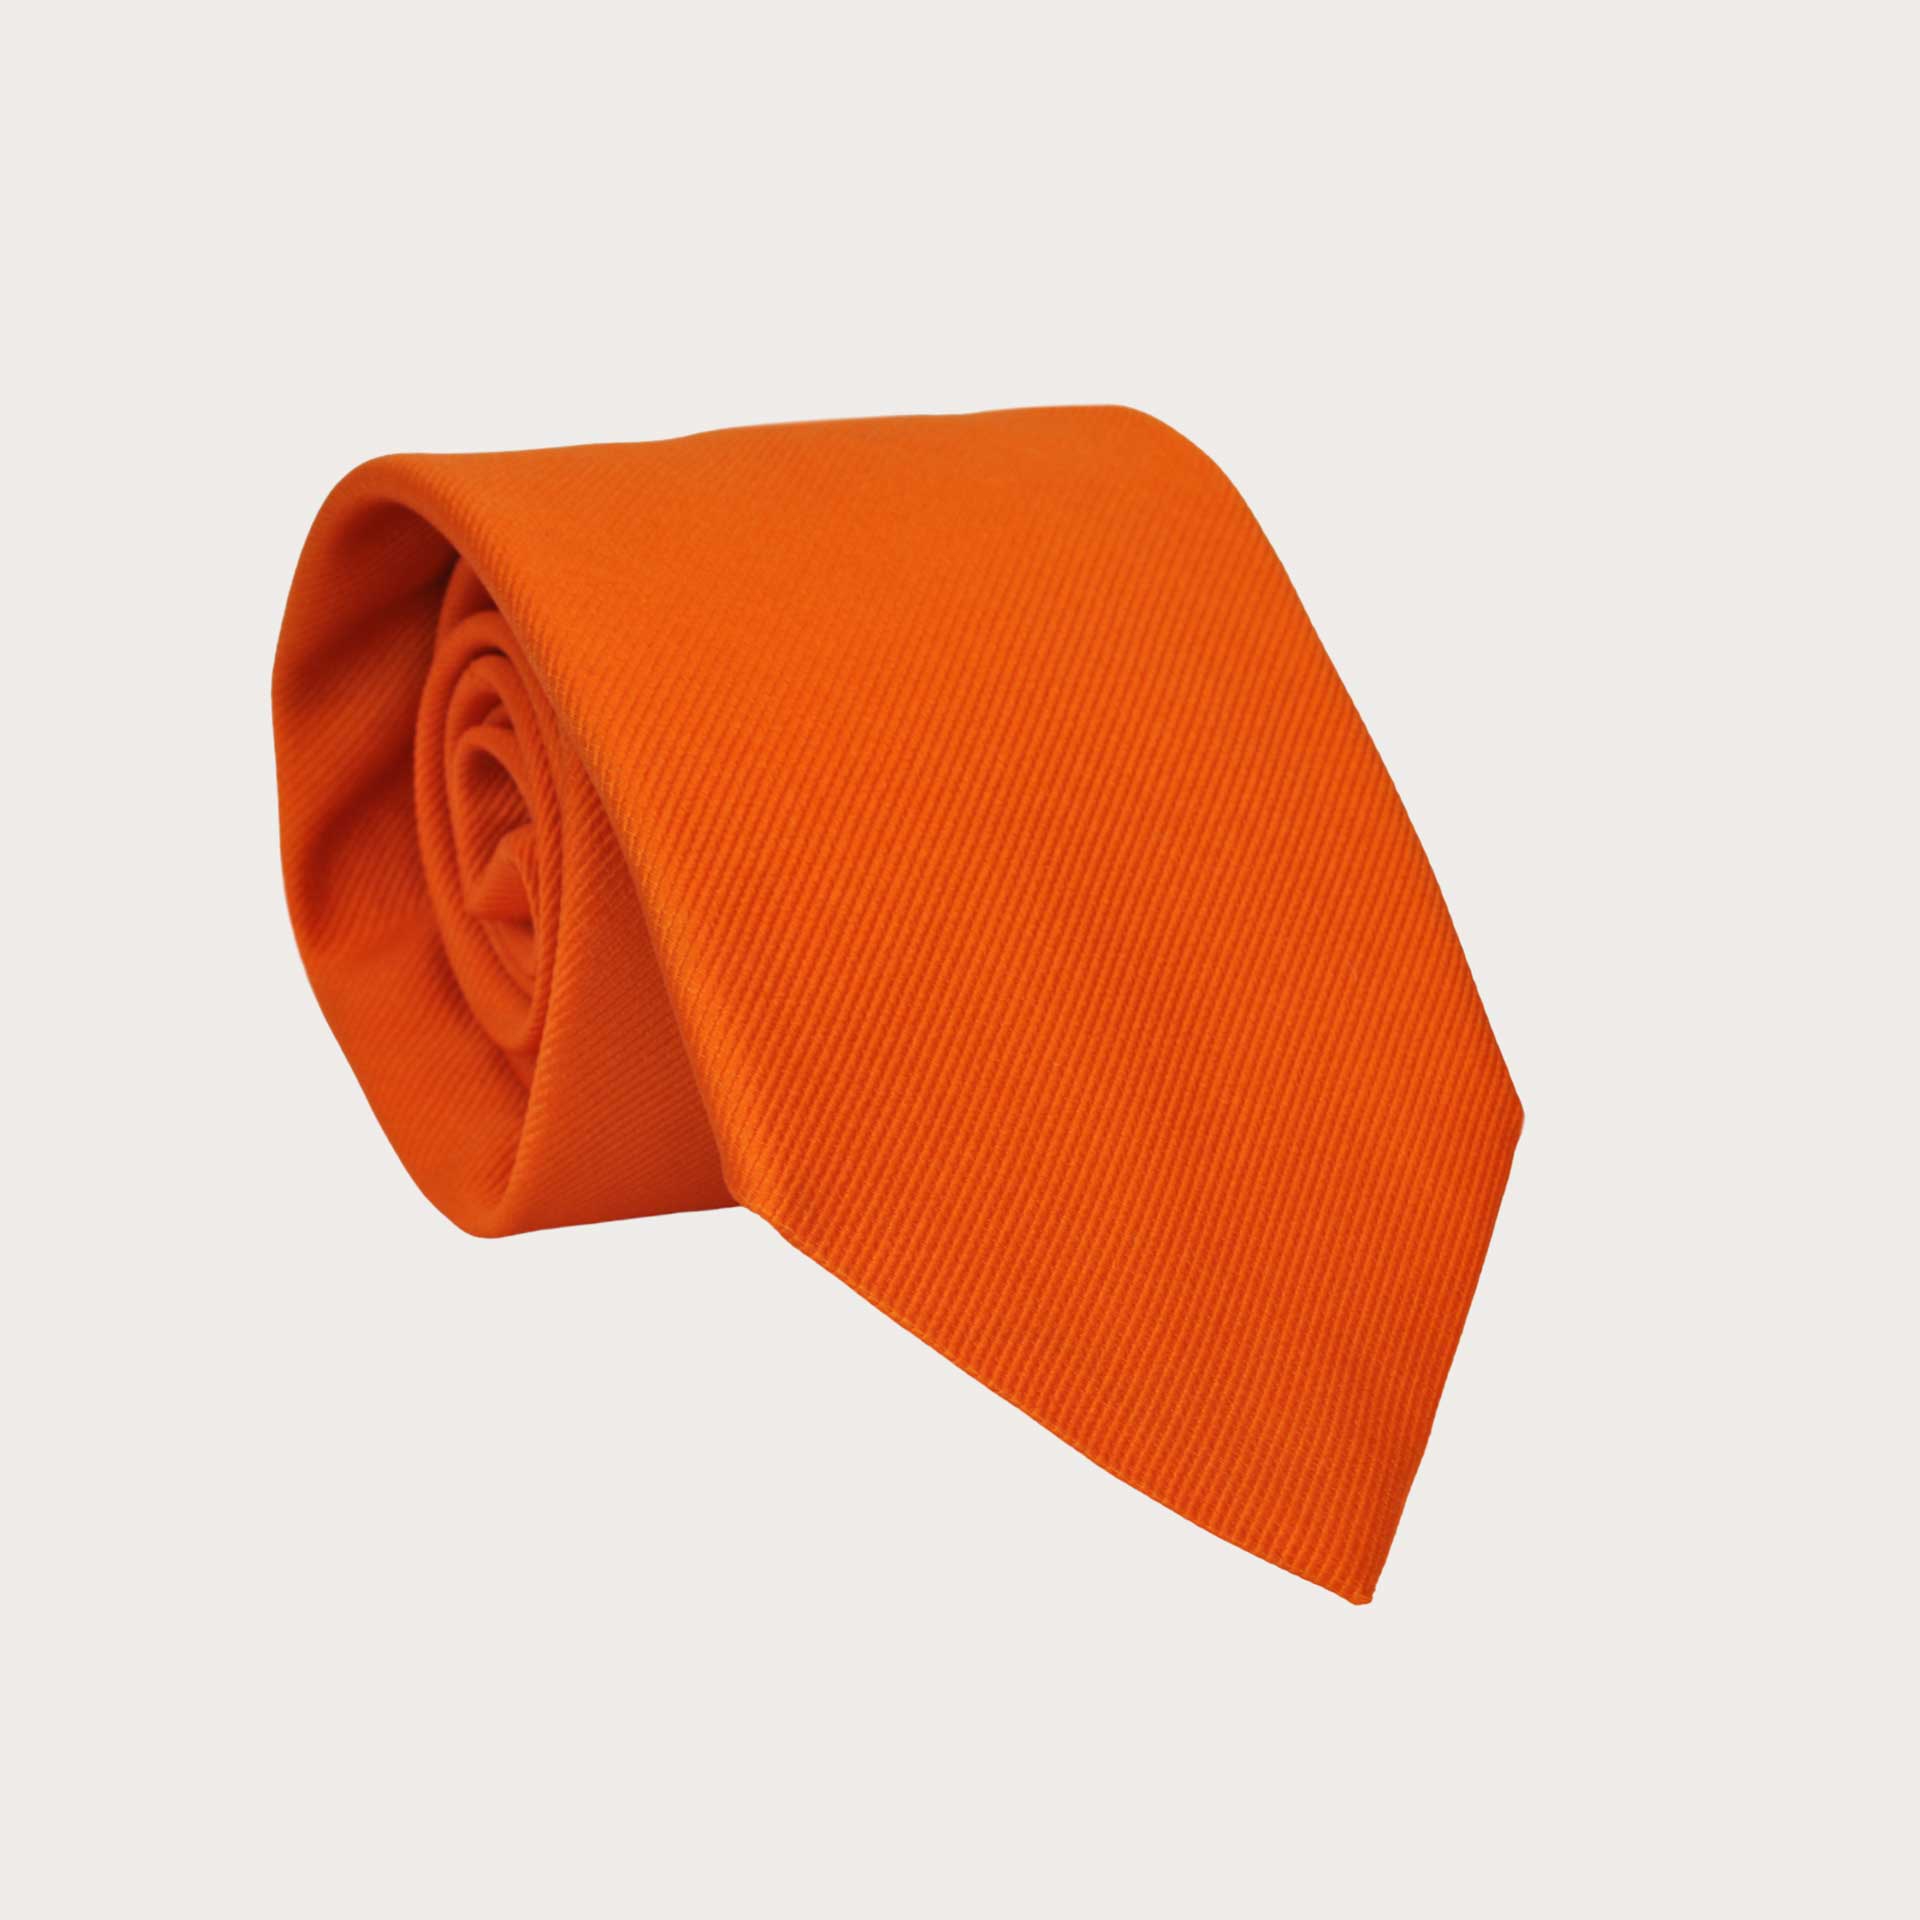 BRUCLE Exclusive orange silk tie